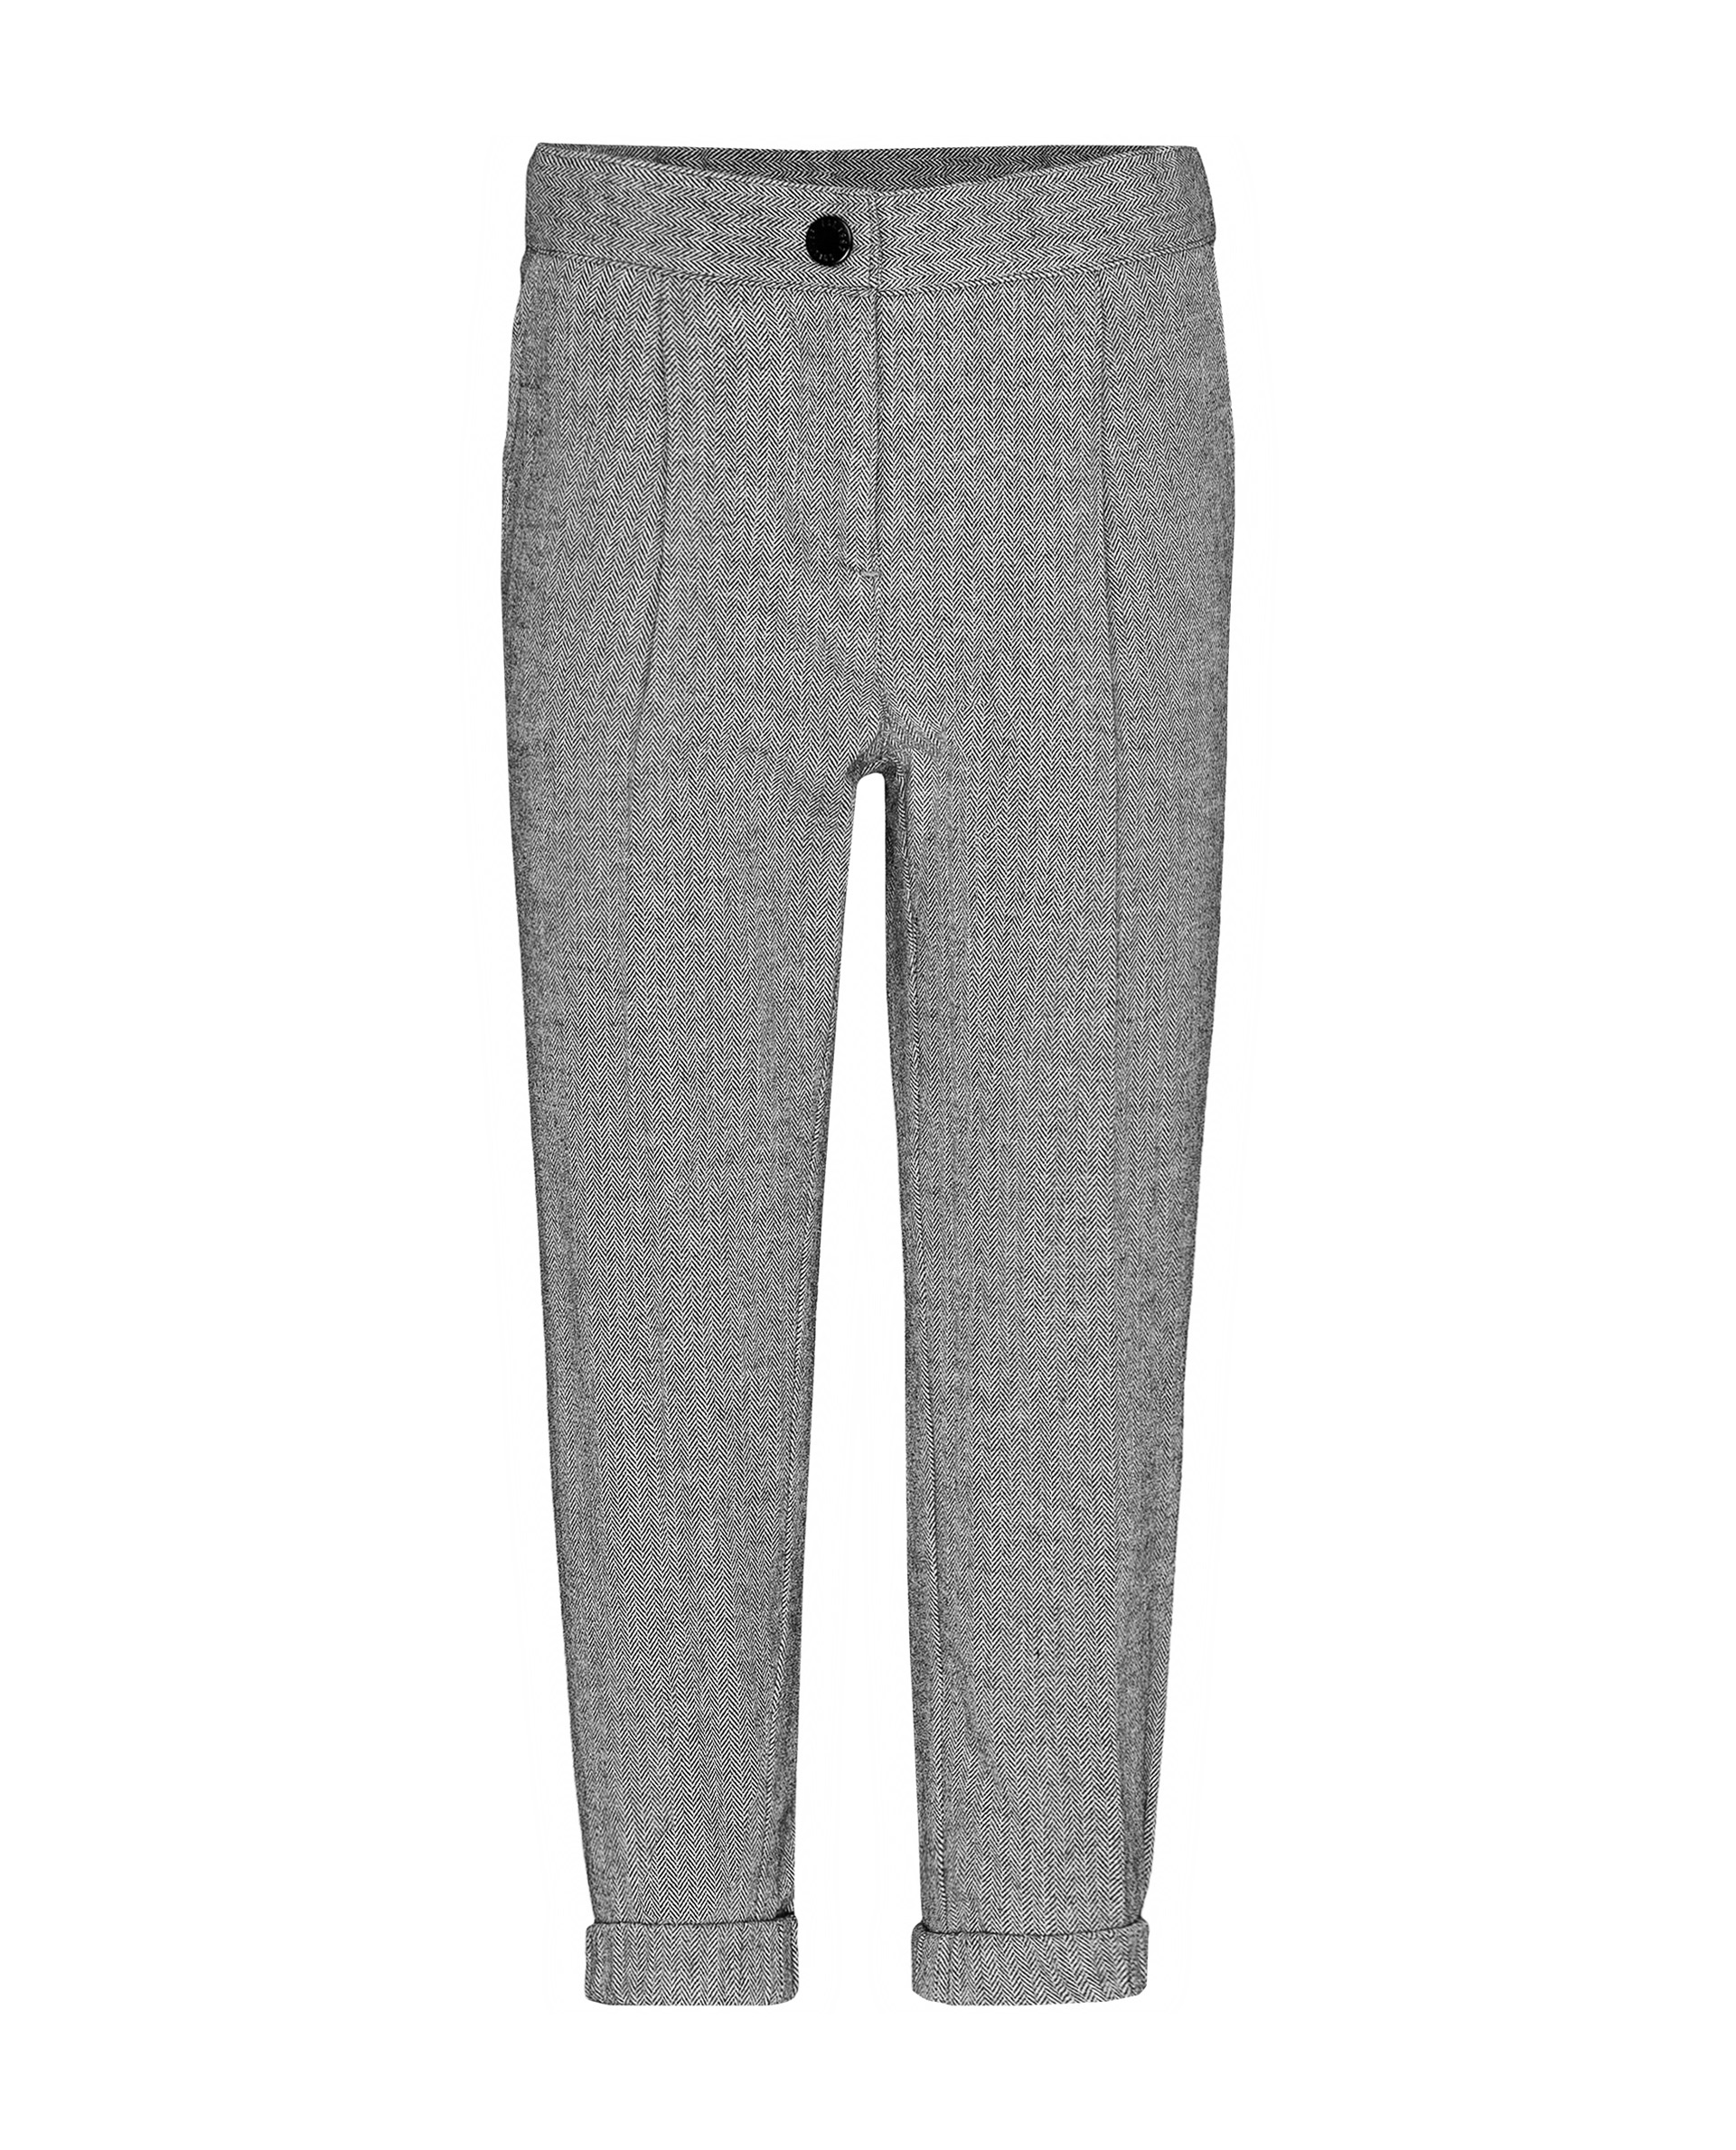 Серые брюки Gulliver 21901GMC6301, размер 104, цвет серый - фото 1